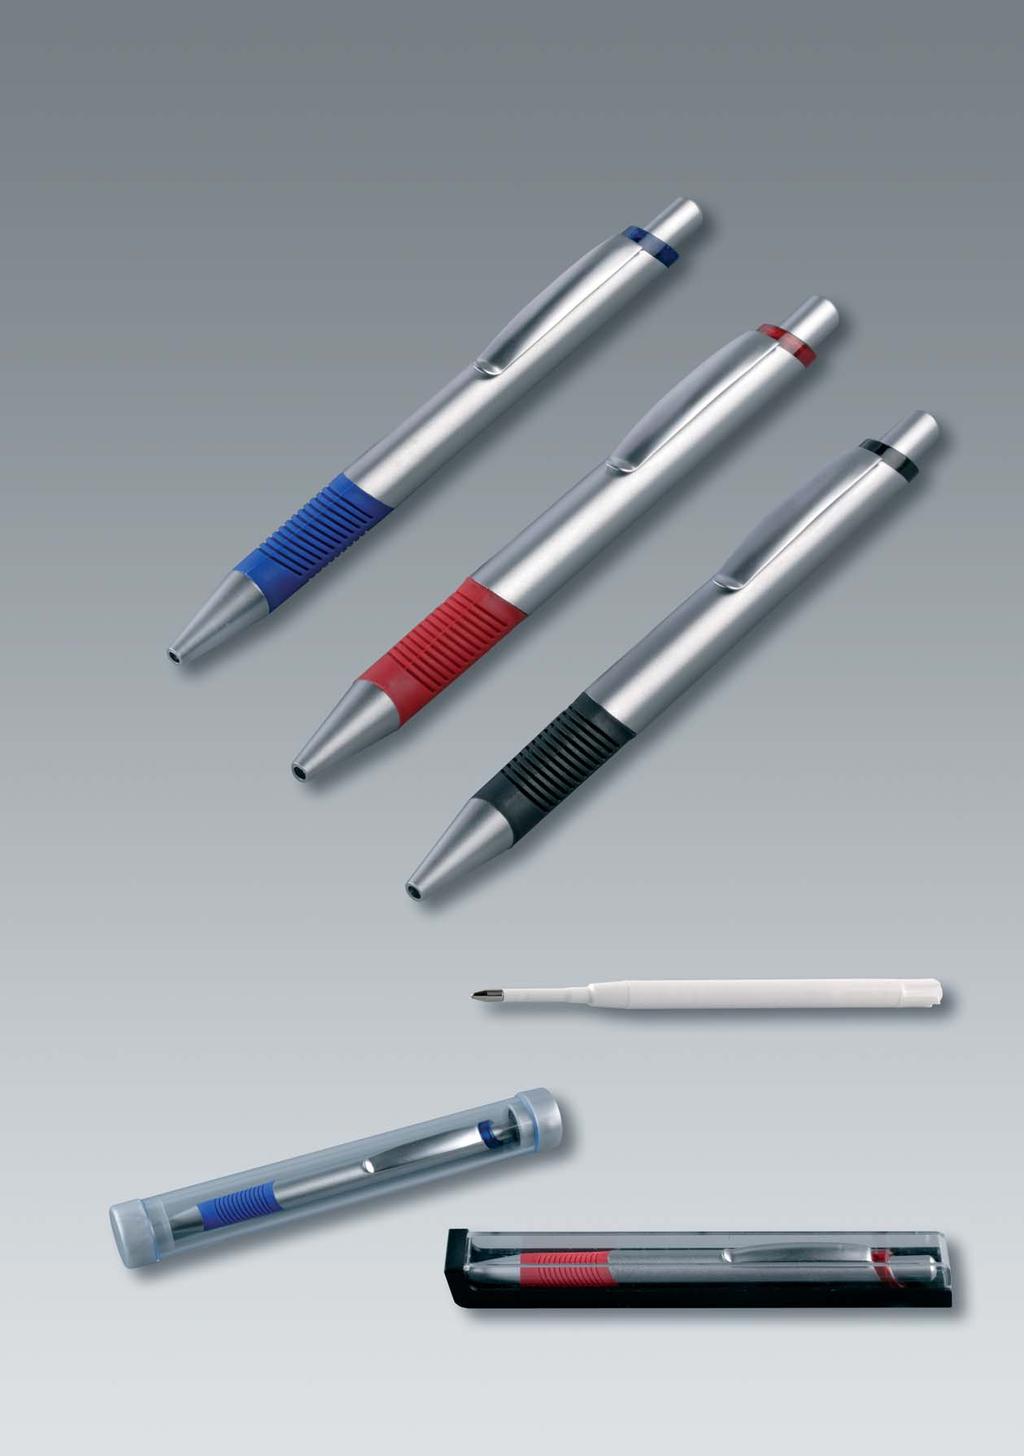 Article 400/KS: aluminium ball pen with plastic parkertype refill, blue ink.